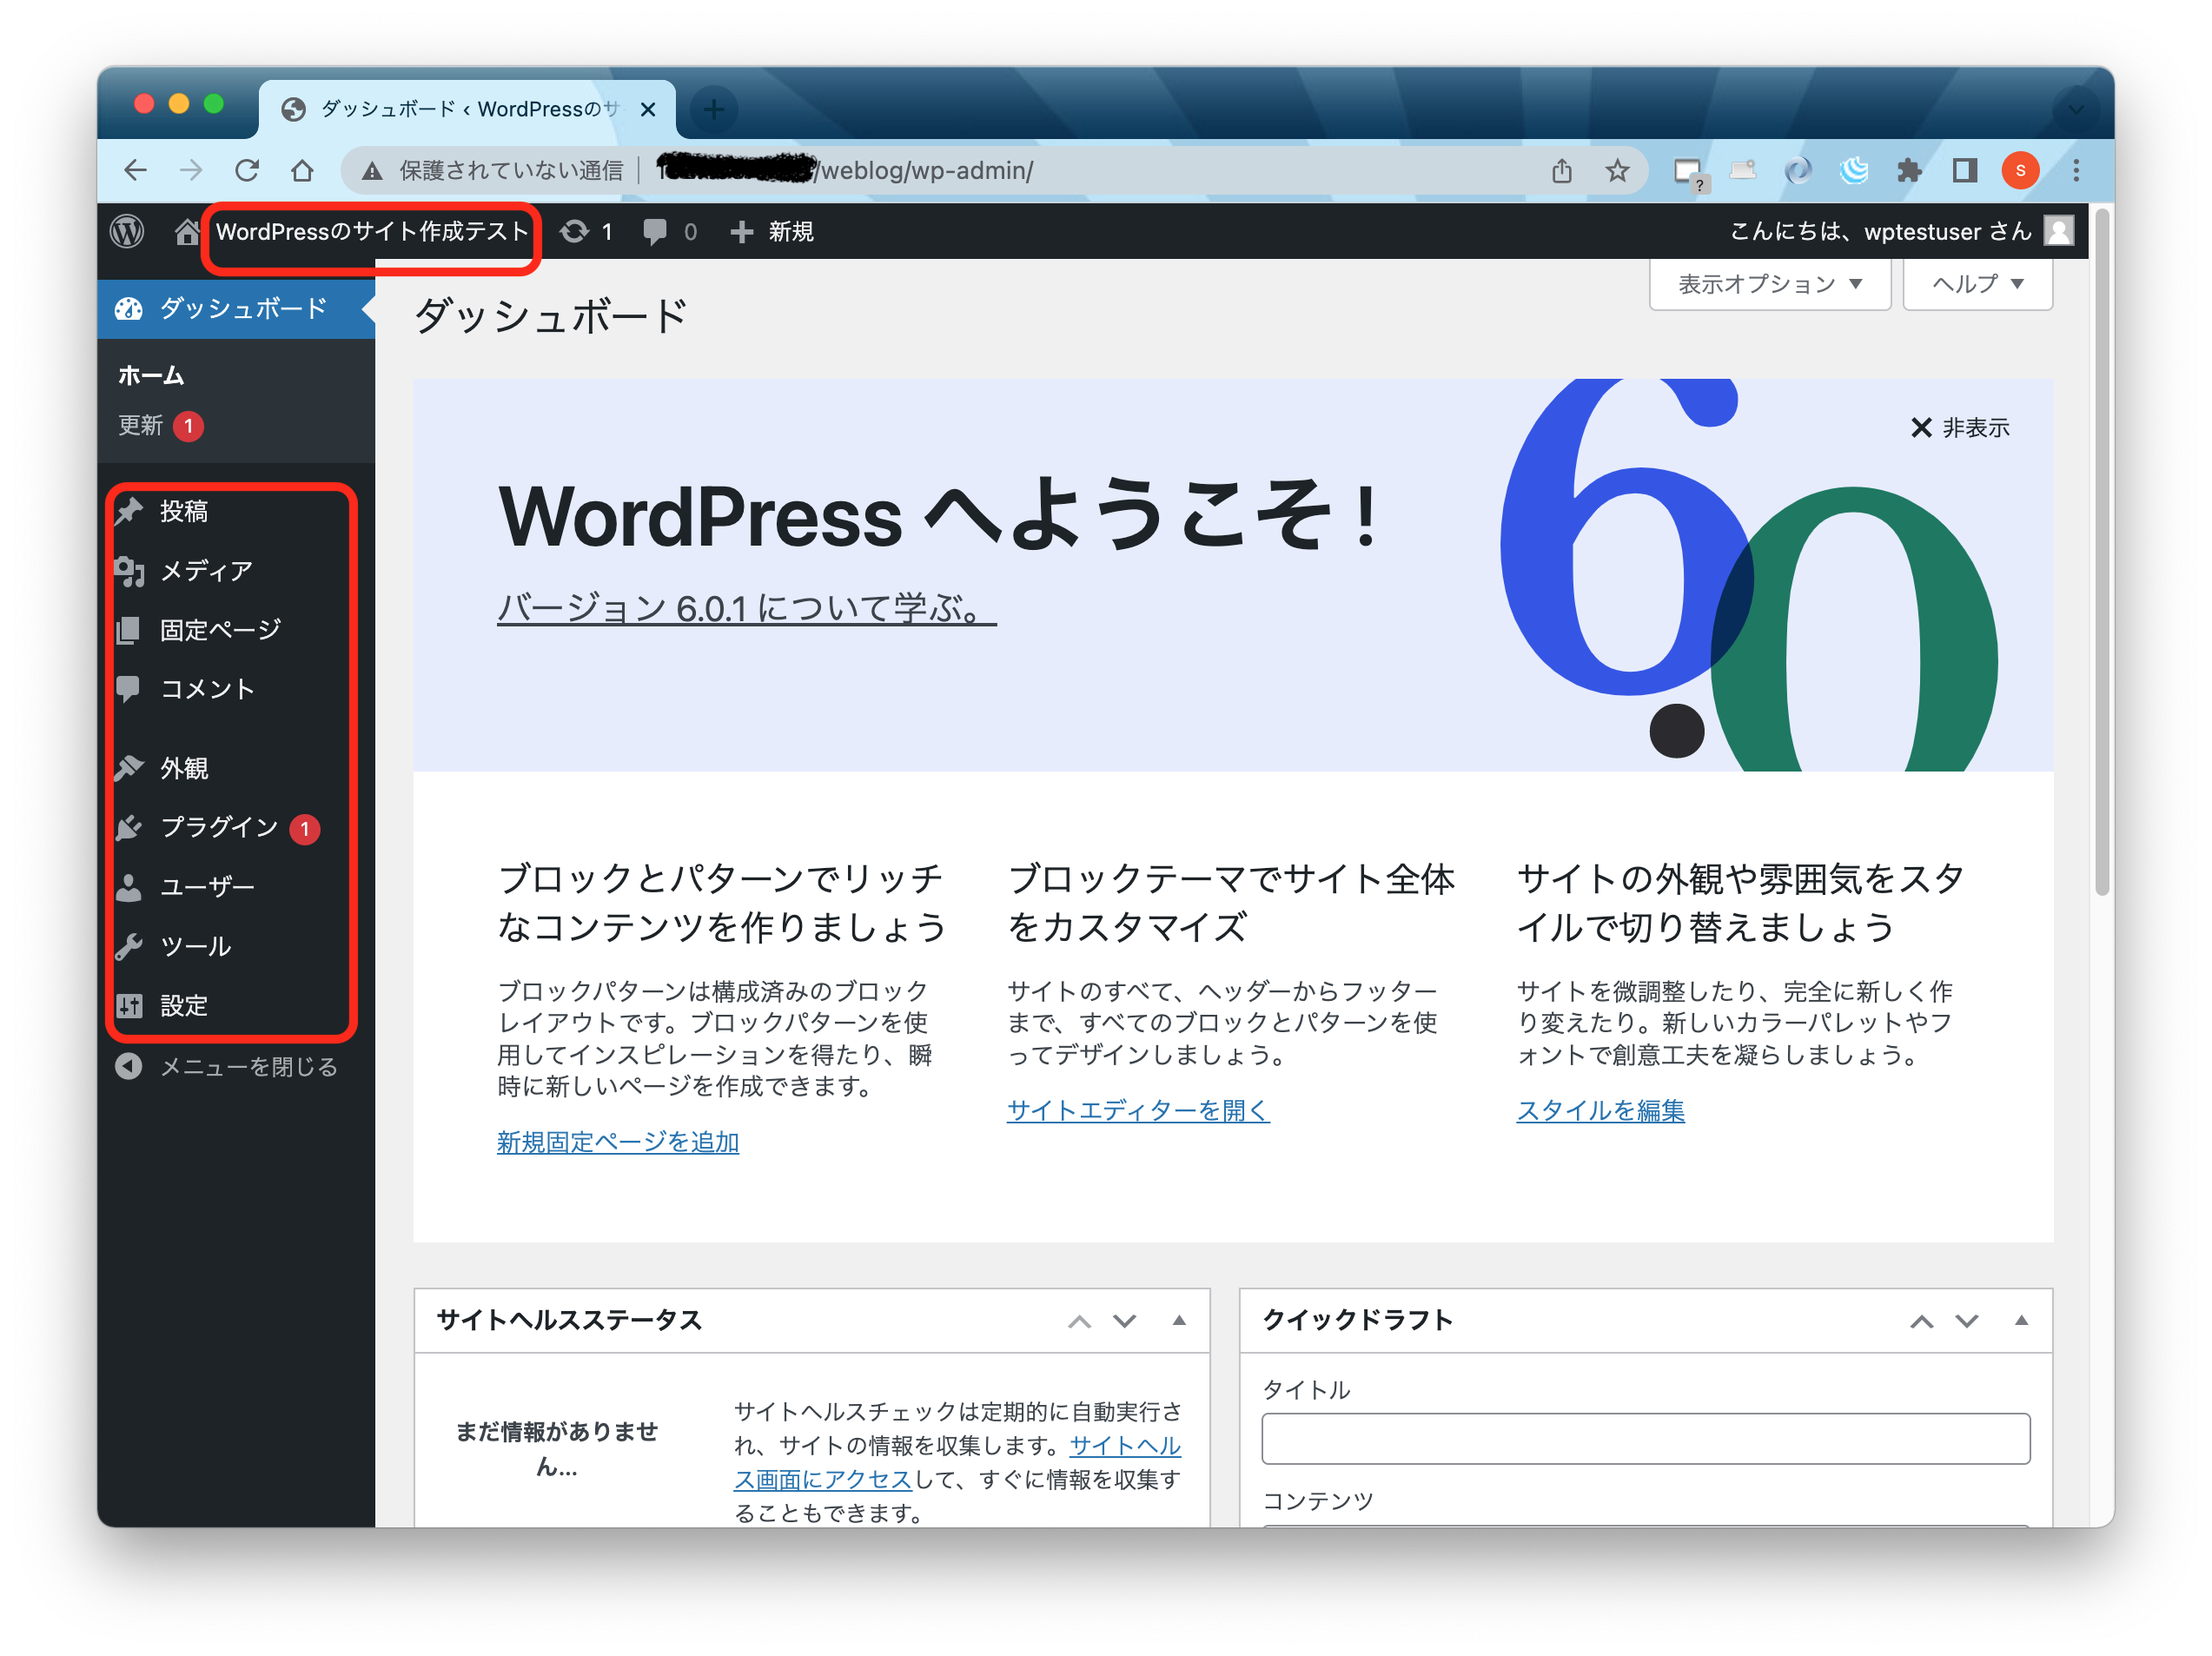 WordPressの管理画面(ダッシュボード)